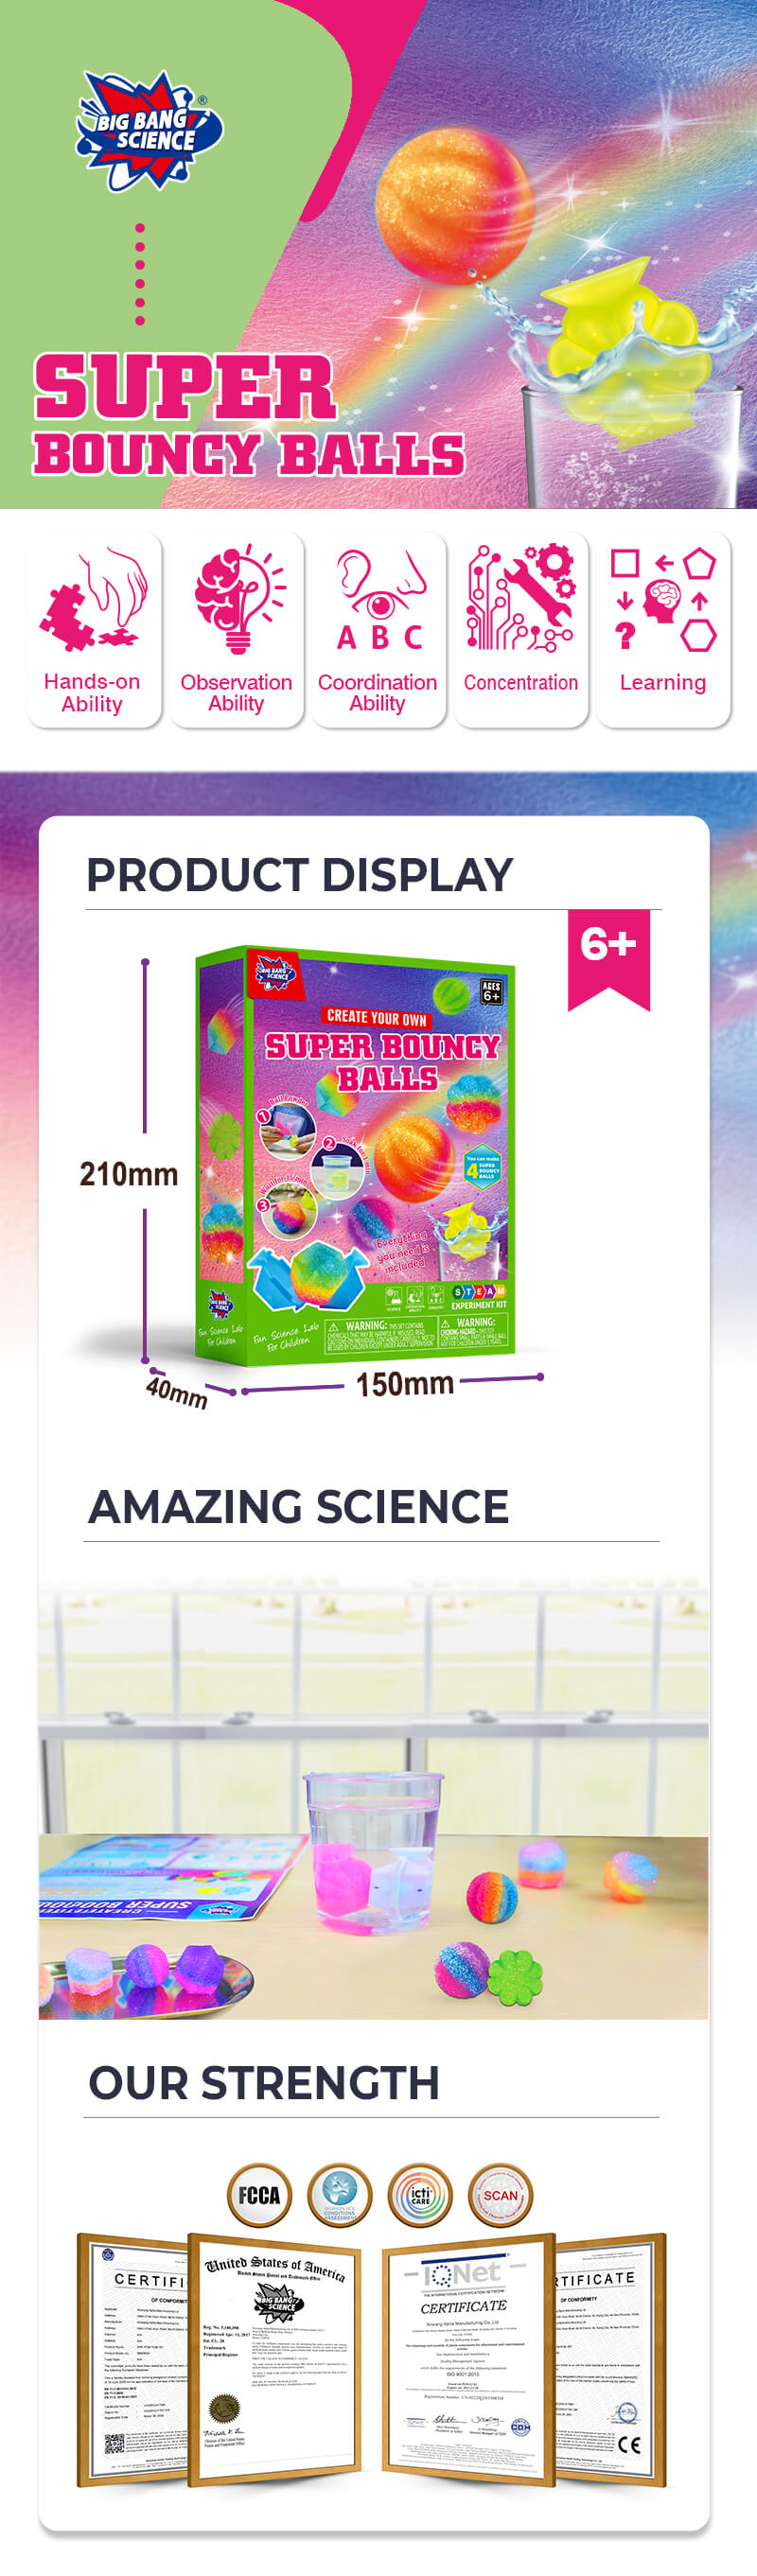 Super-Bouncy-Balls-Product-details-chart